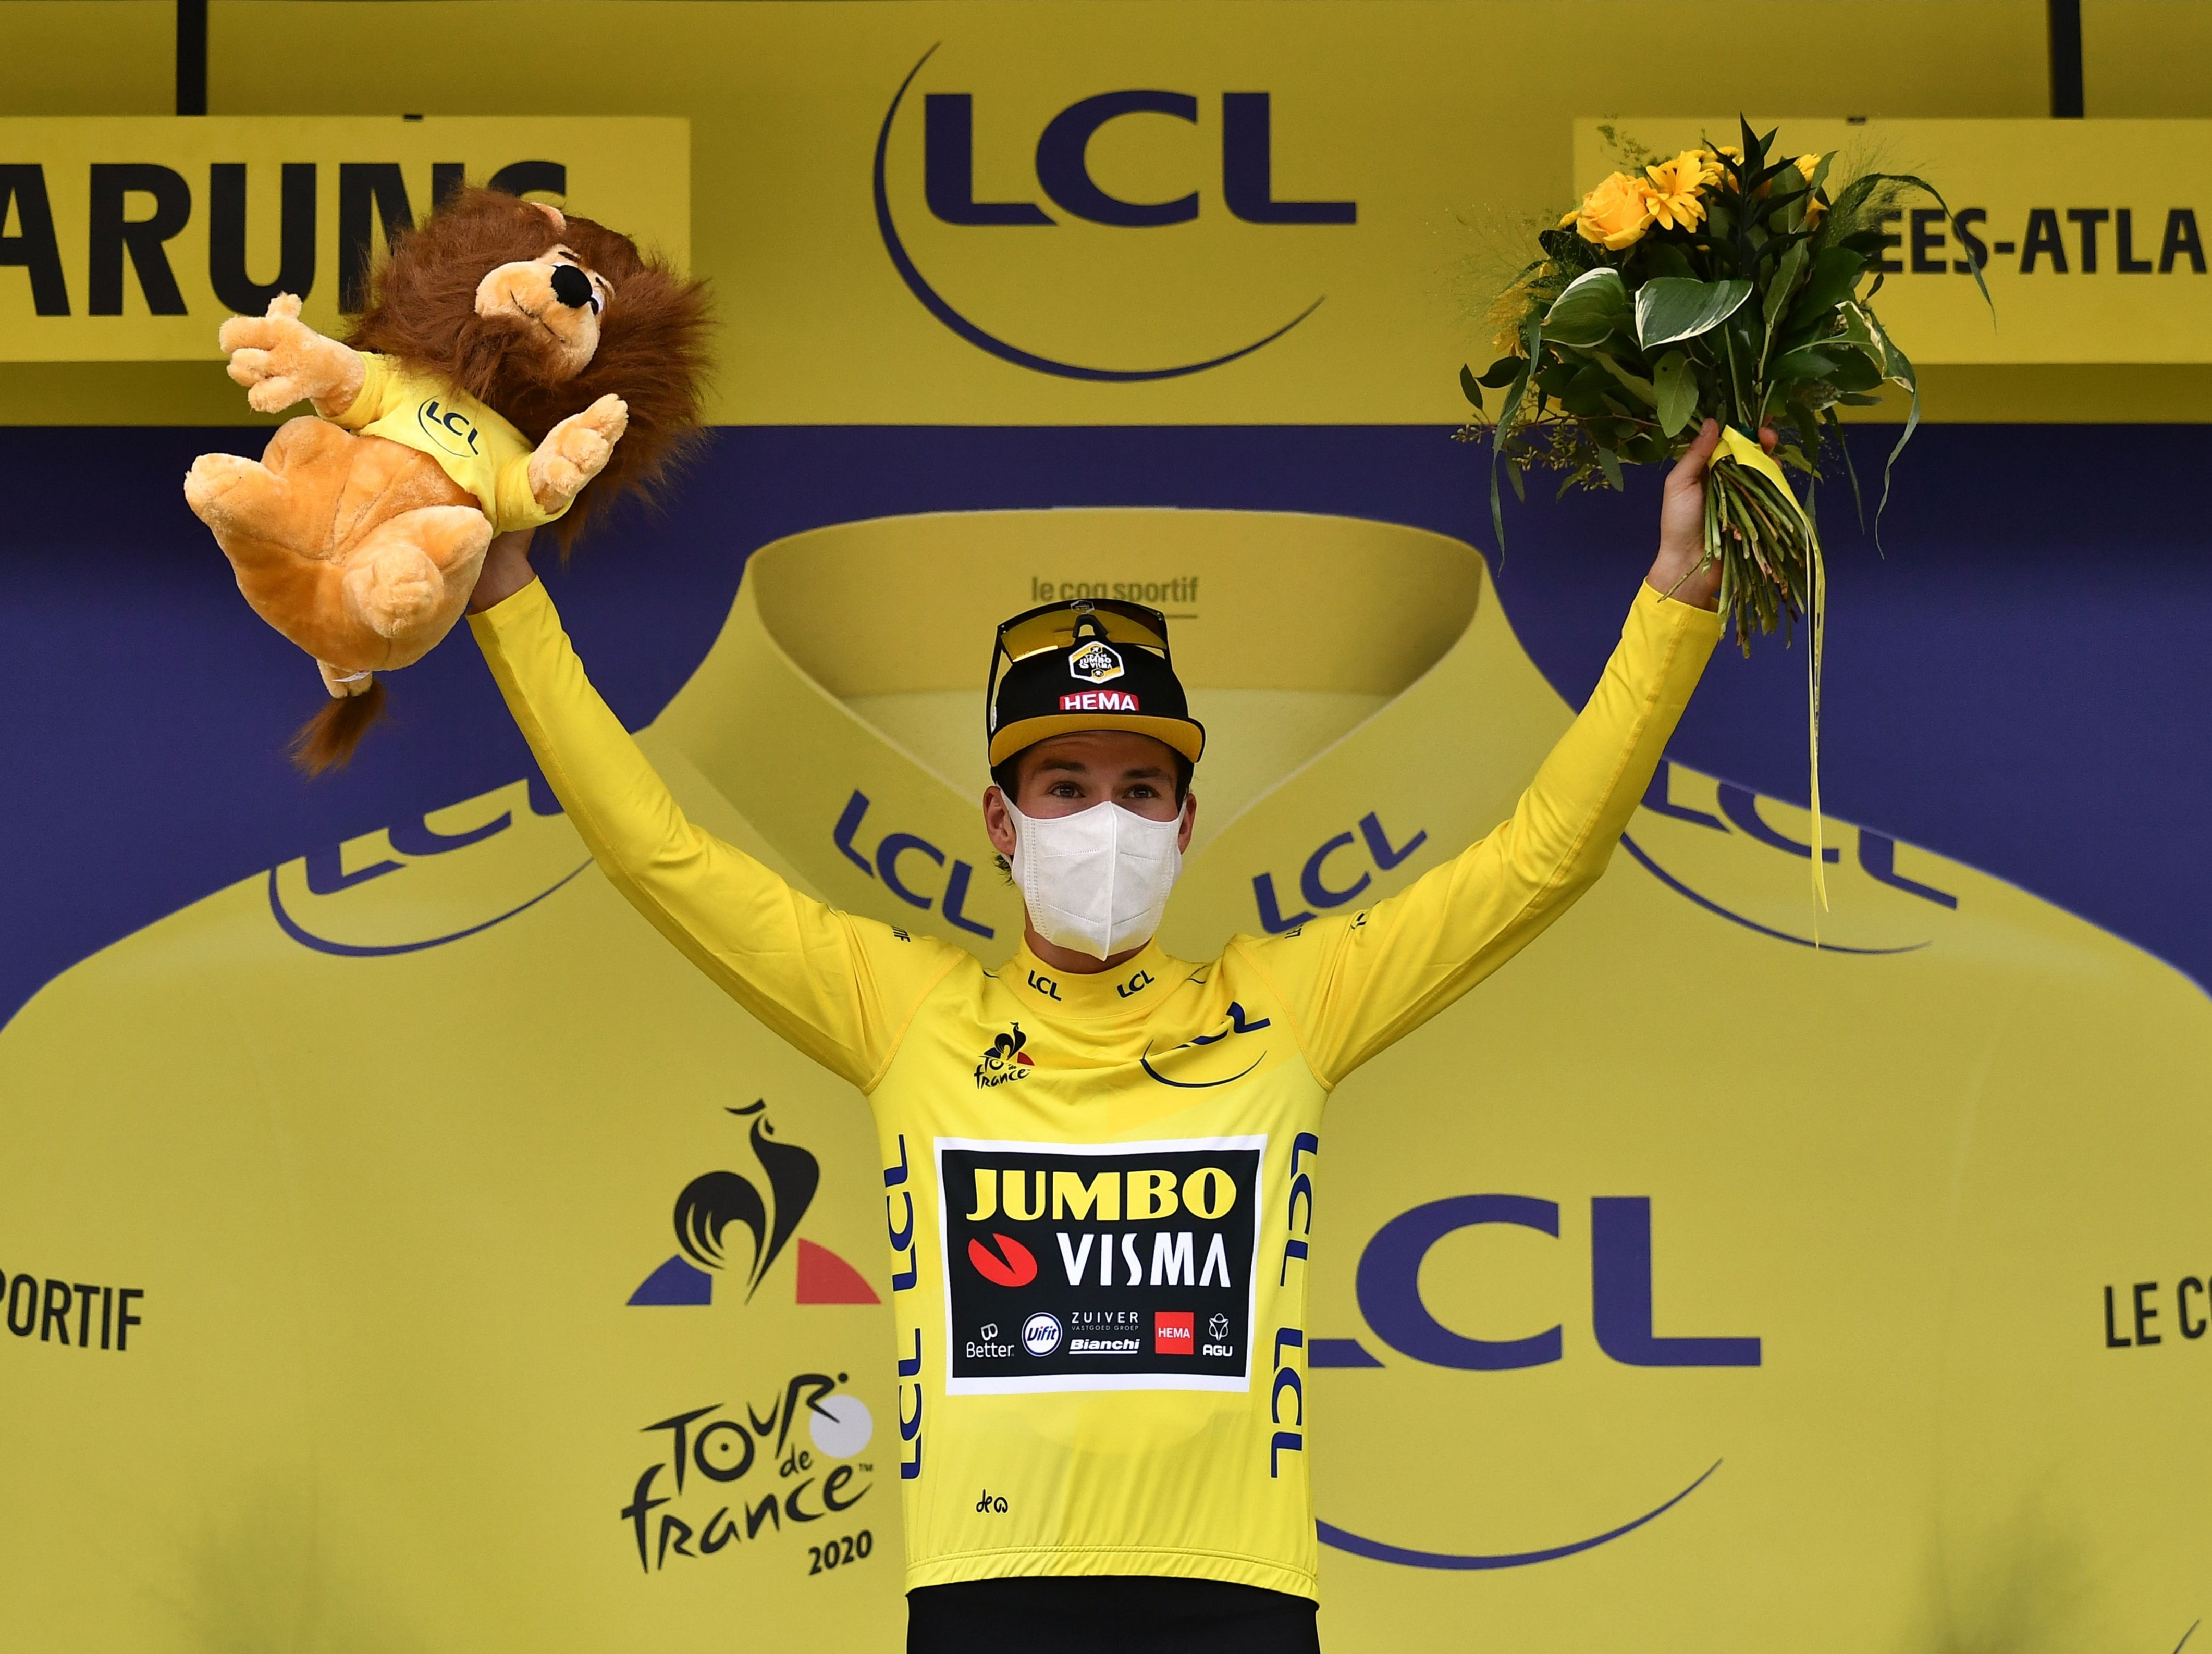 Primoz Roglic took the yellow jersey from Yates